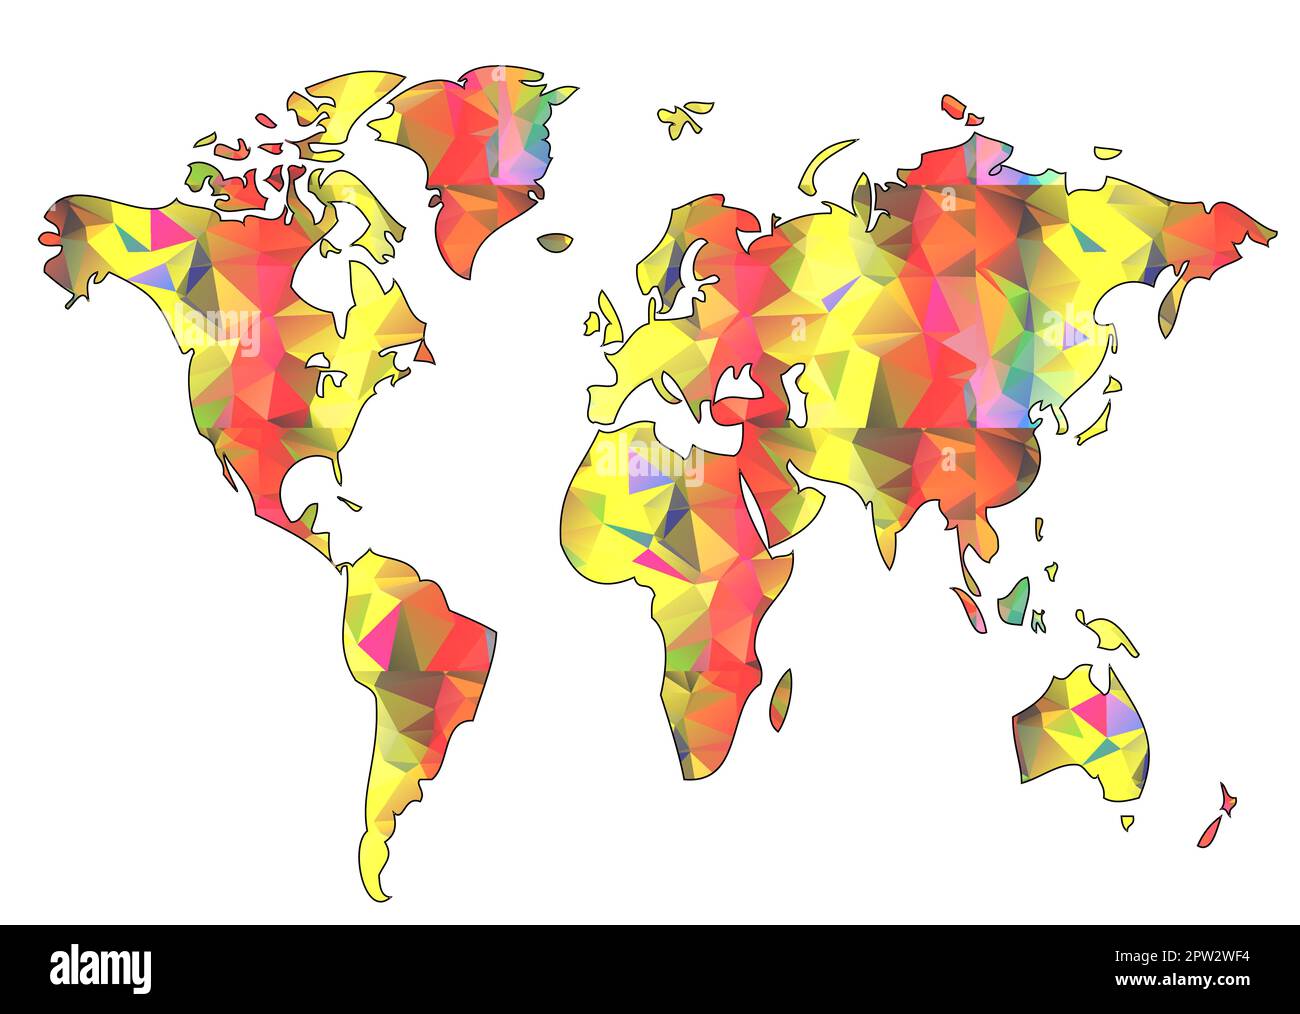 world map illustration Stock Vector